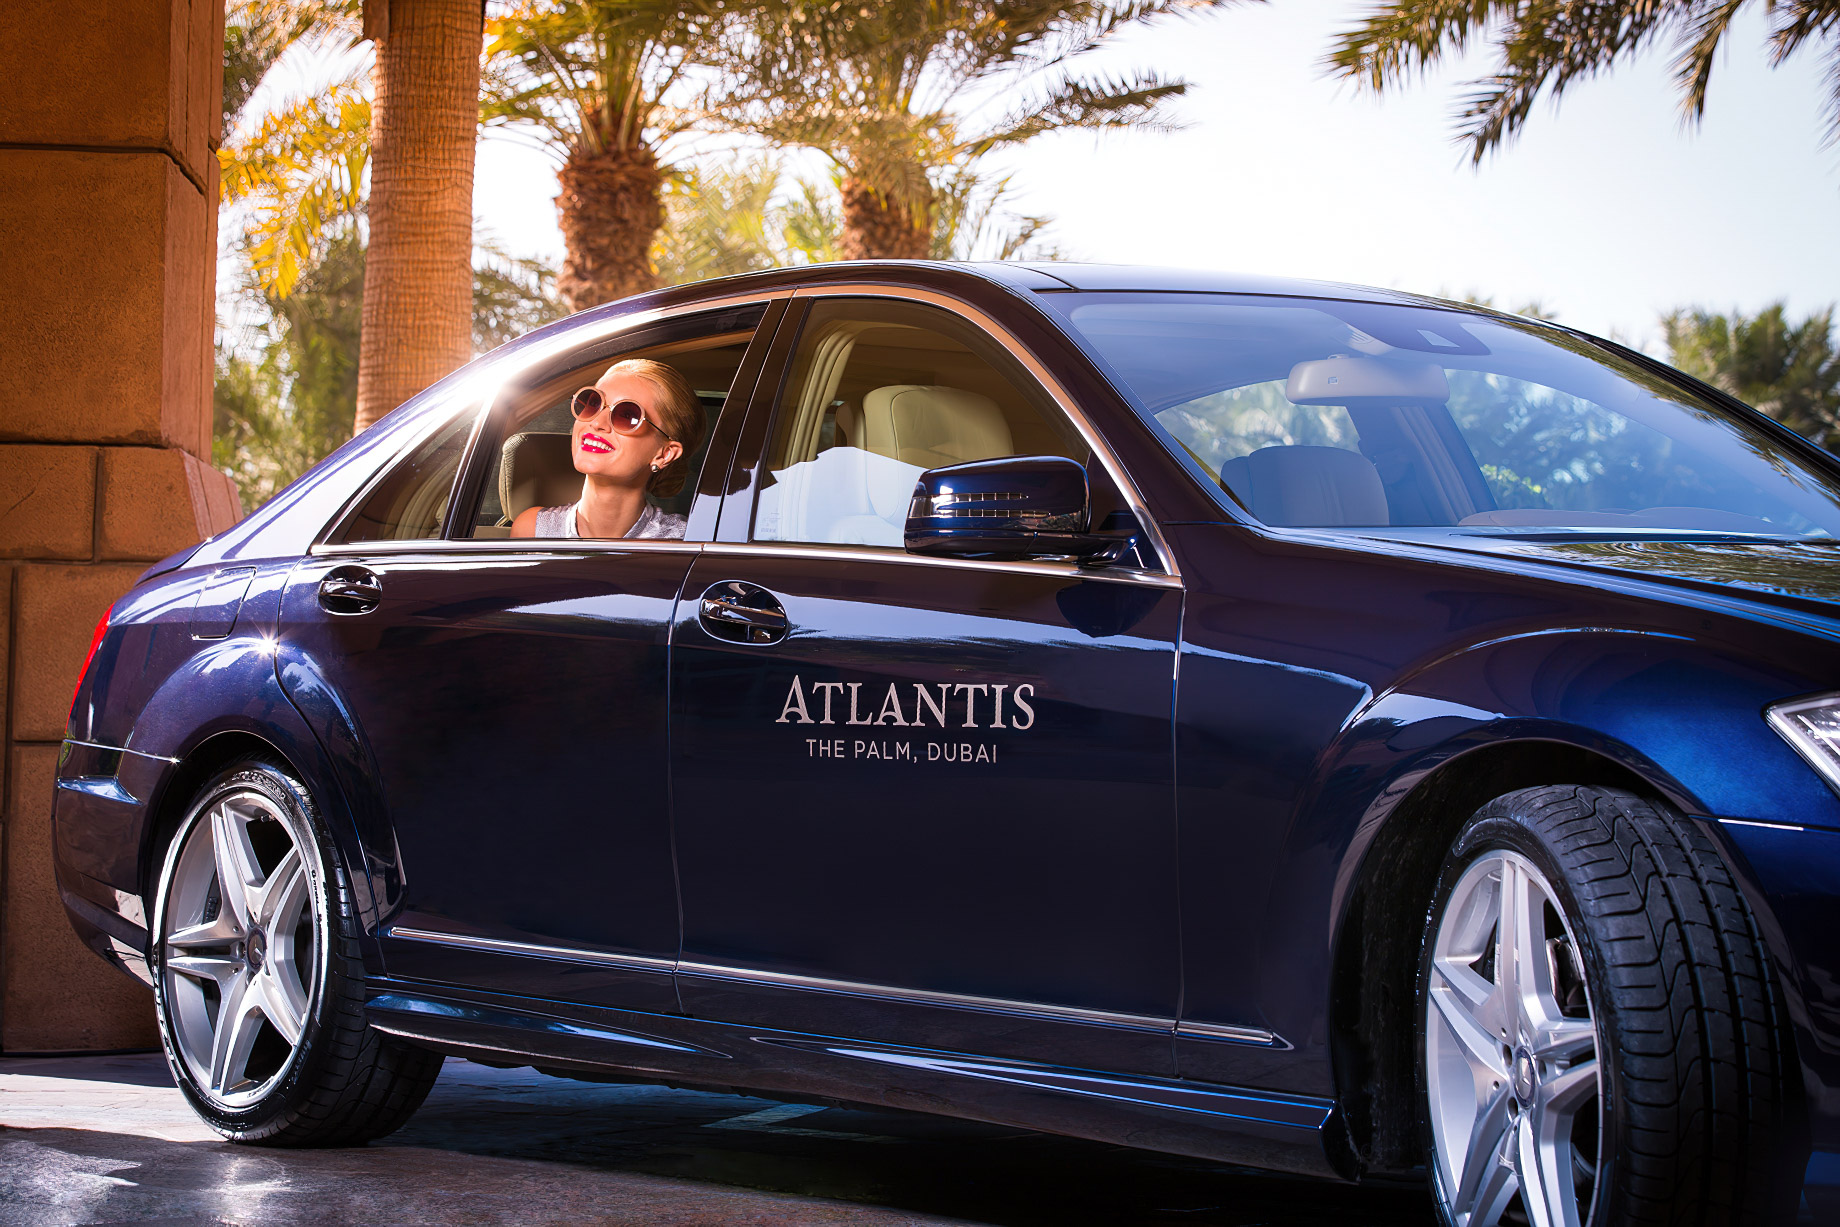 Atlantis The Palm Resort – Crescent Rd, Dubai, UAE – Arrival Limo